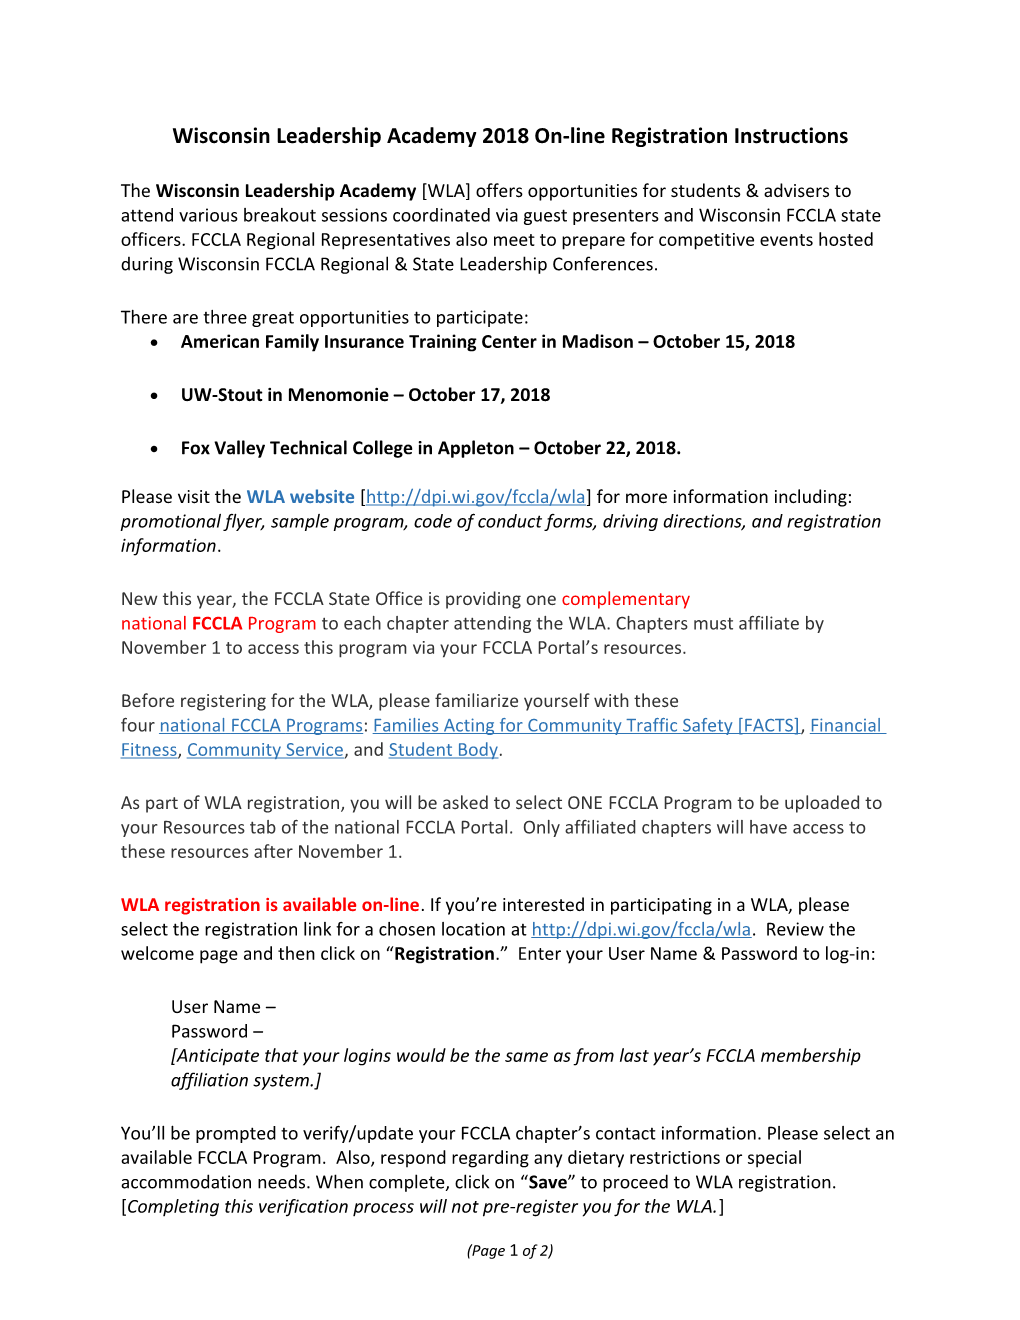 Wisconsin Leadership Academy On-Line Registration Instructions - FCCLA